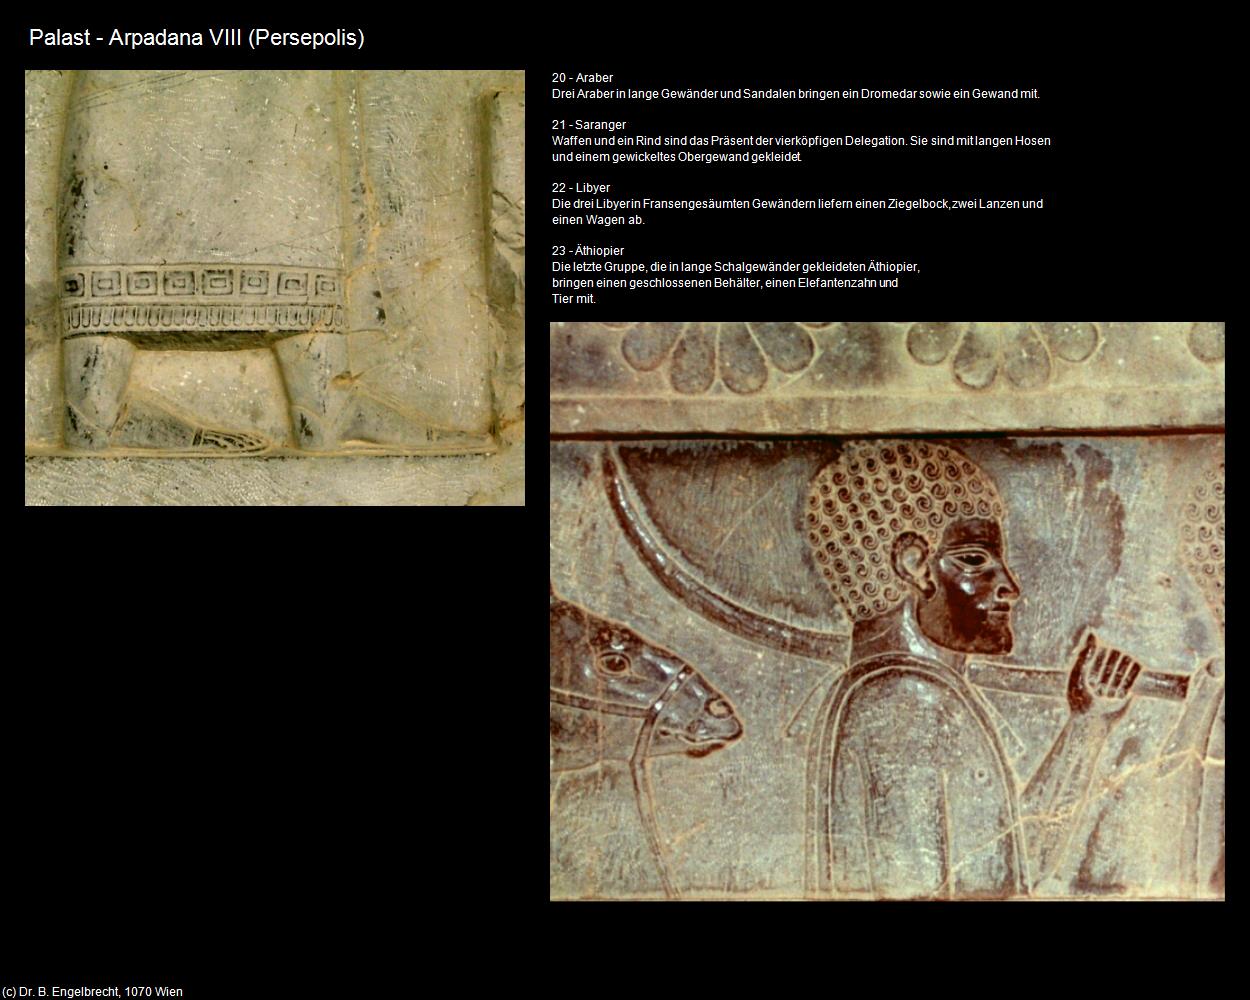 Palast - Arpadana VIII (Persepolis) in Iran